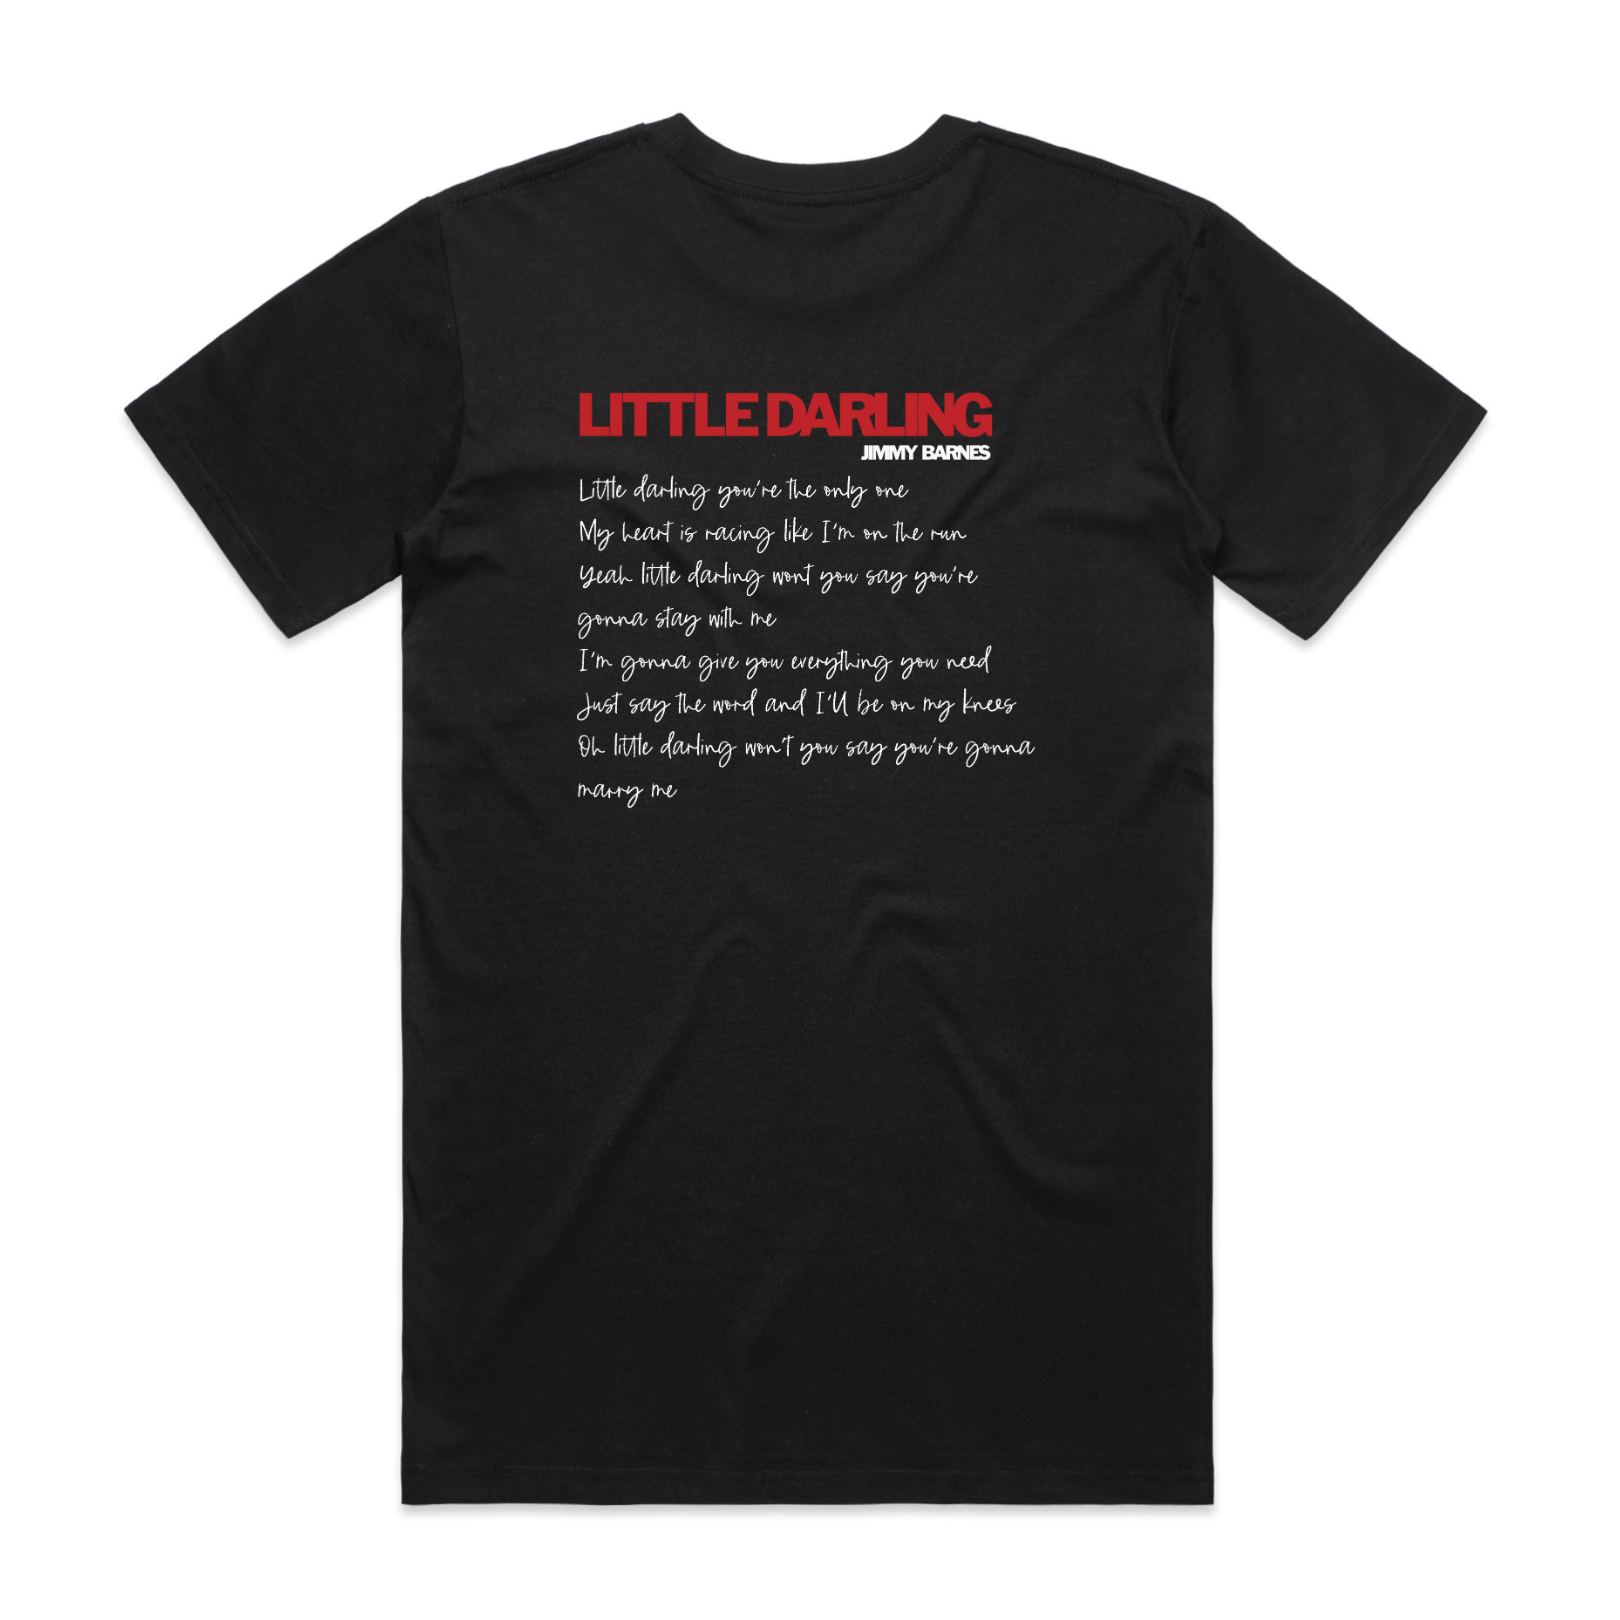 Little Darling | Jimmy Barnes | Unisex T shirt